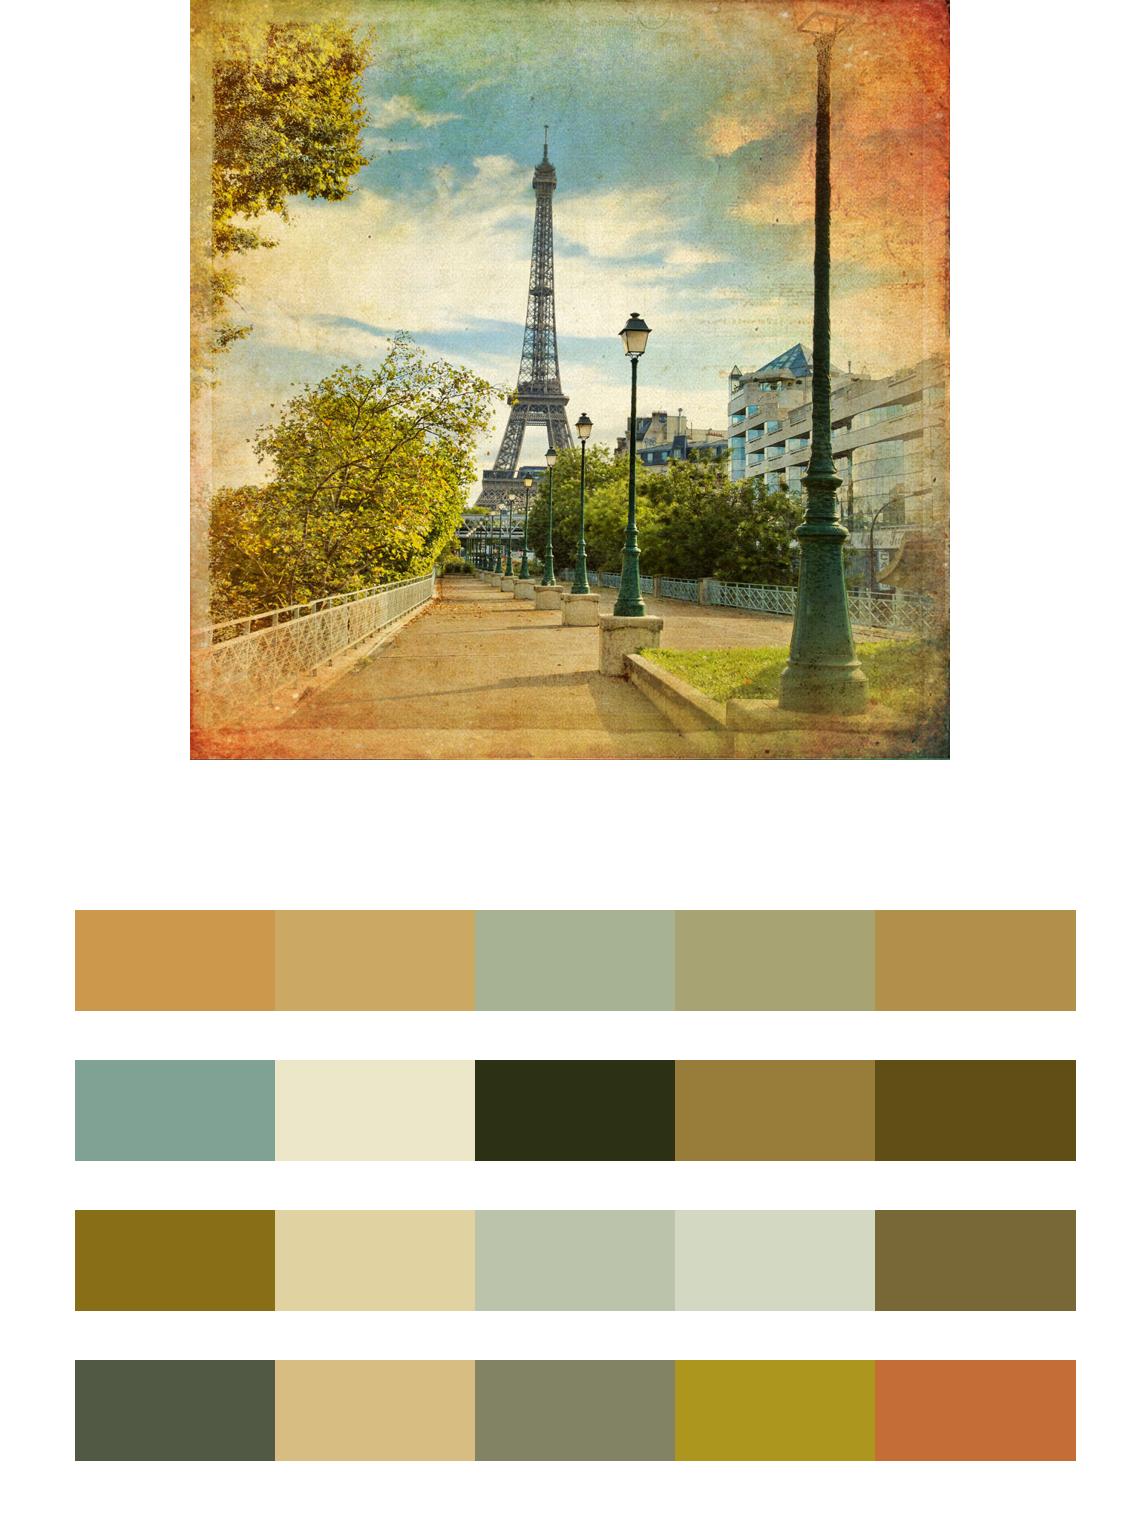 Улочка Парижа состаренная цвета